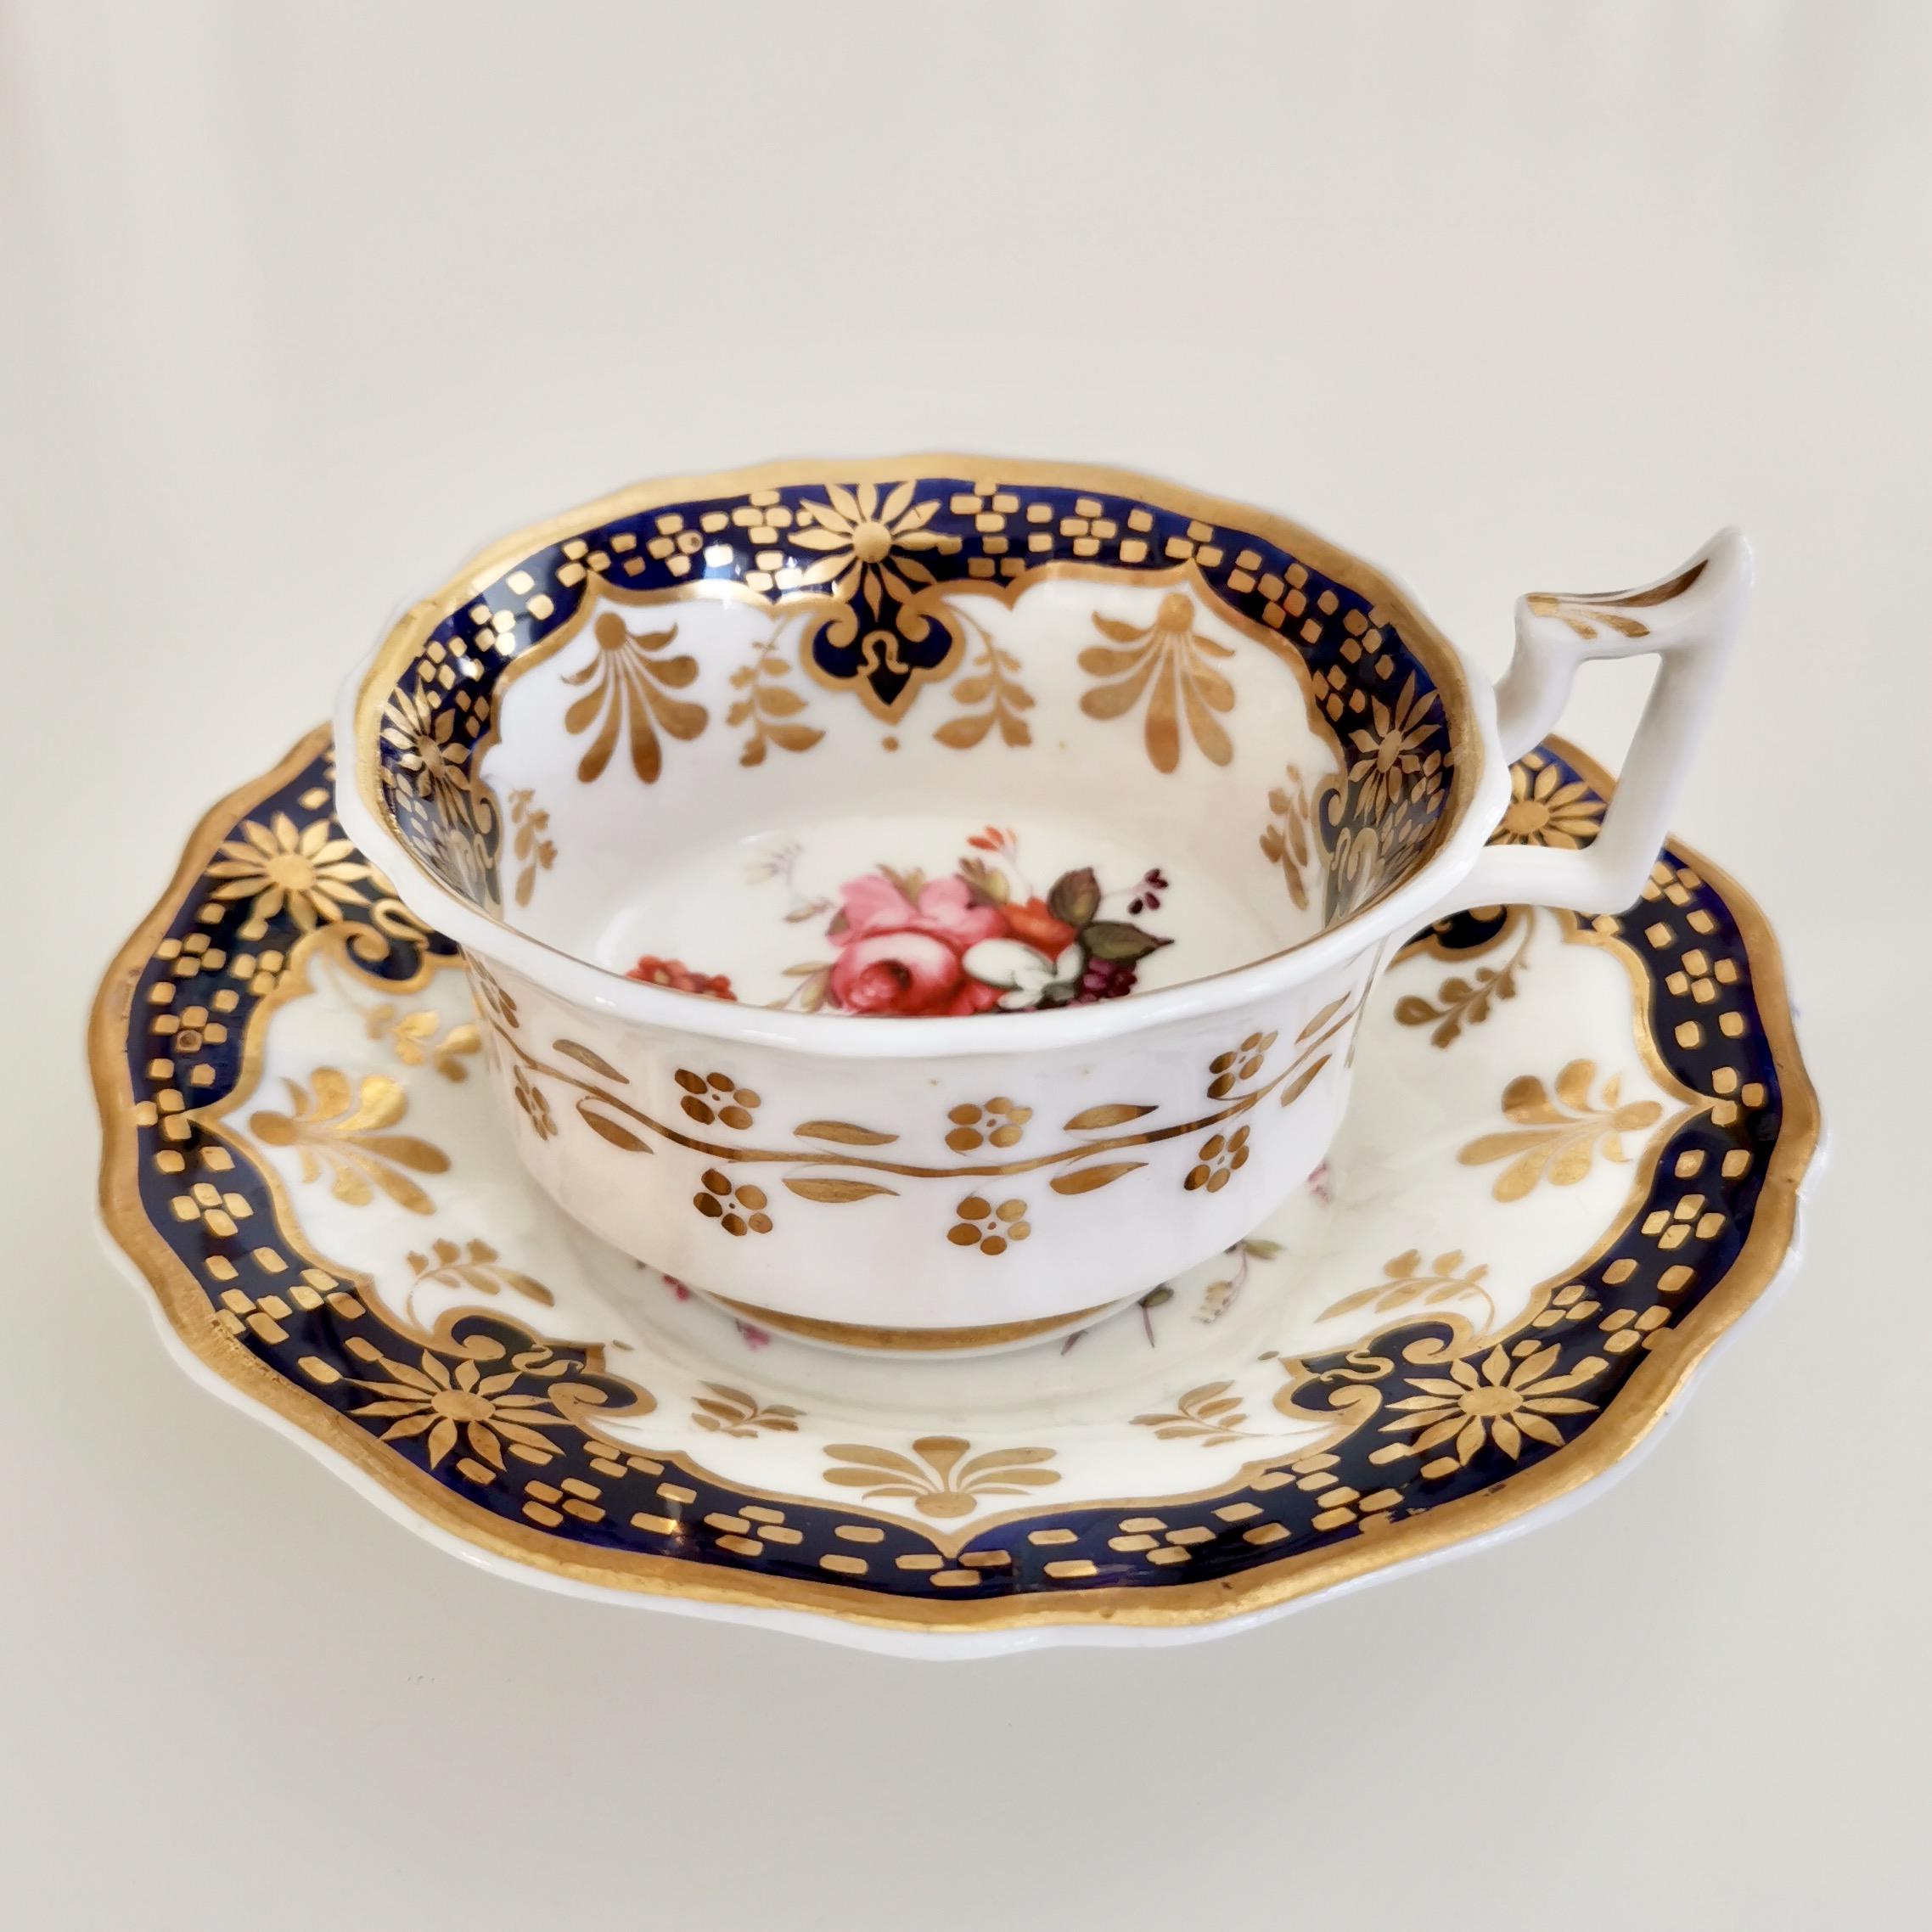 English Ridgway Porcelain Teacup Trio, Cobalt Blue, Gilt and Flowers, Regency circa 1825